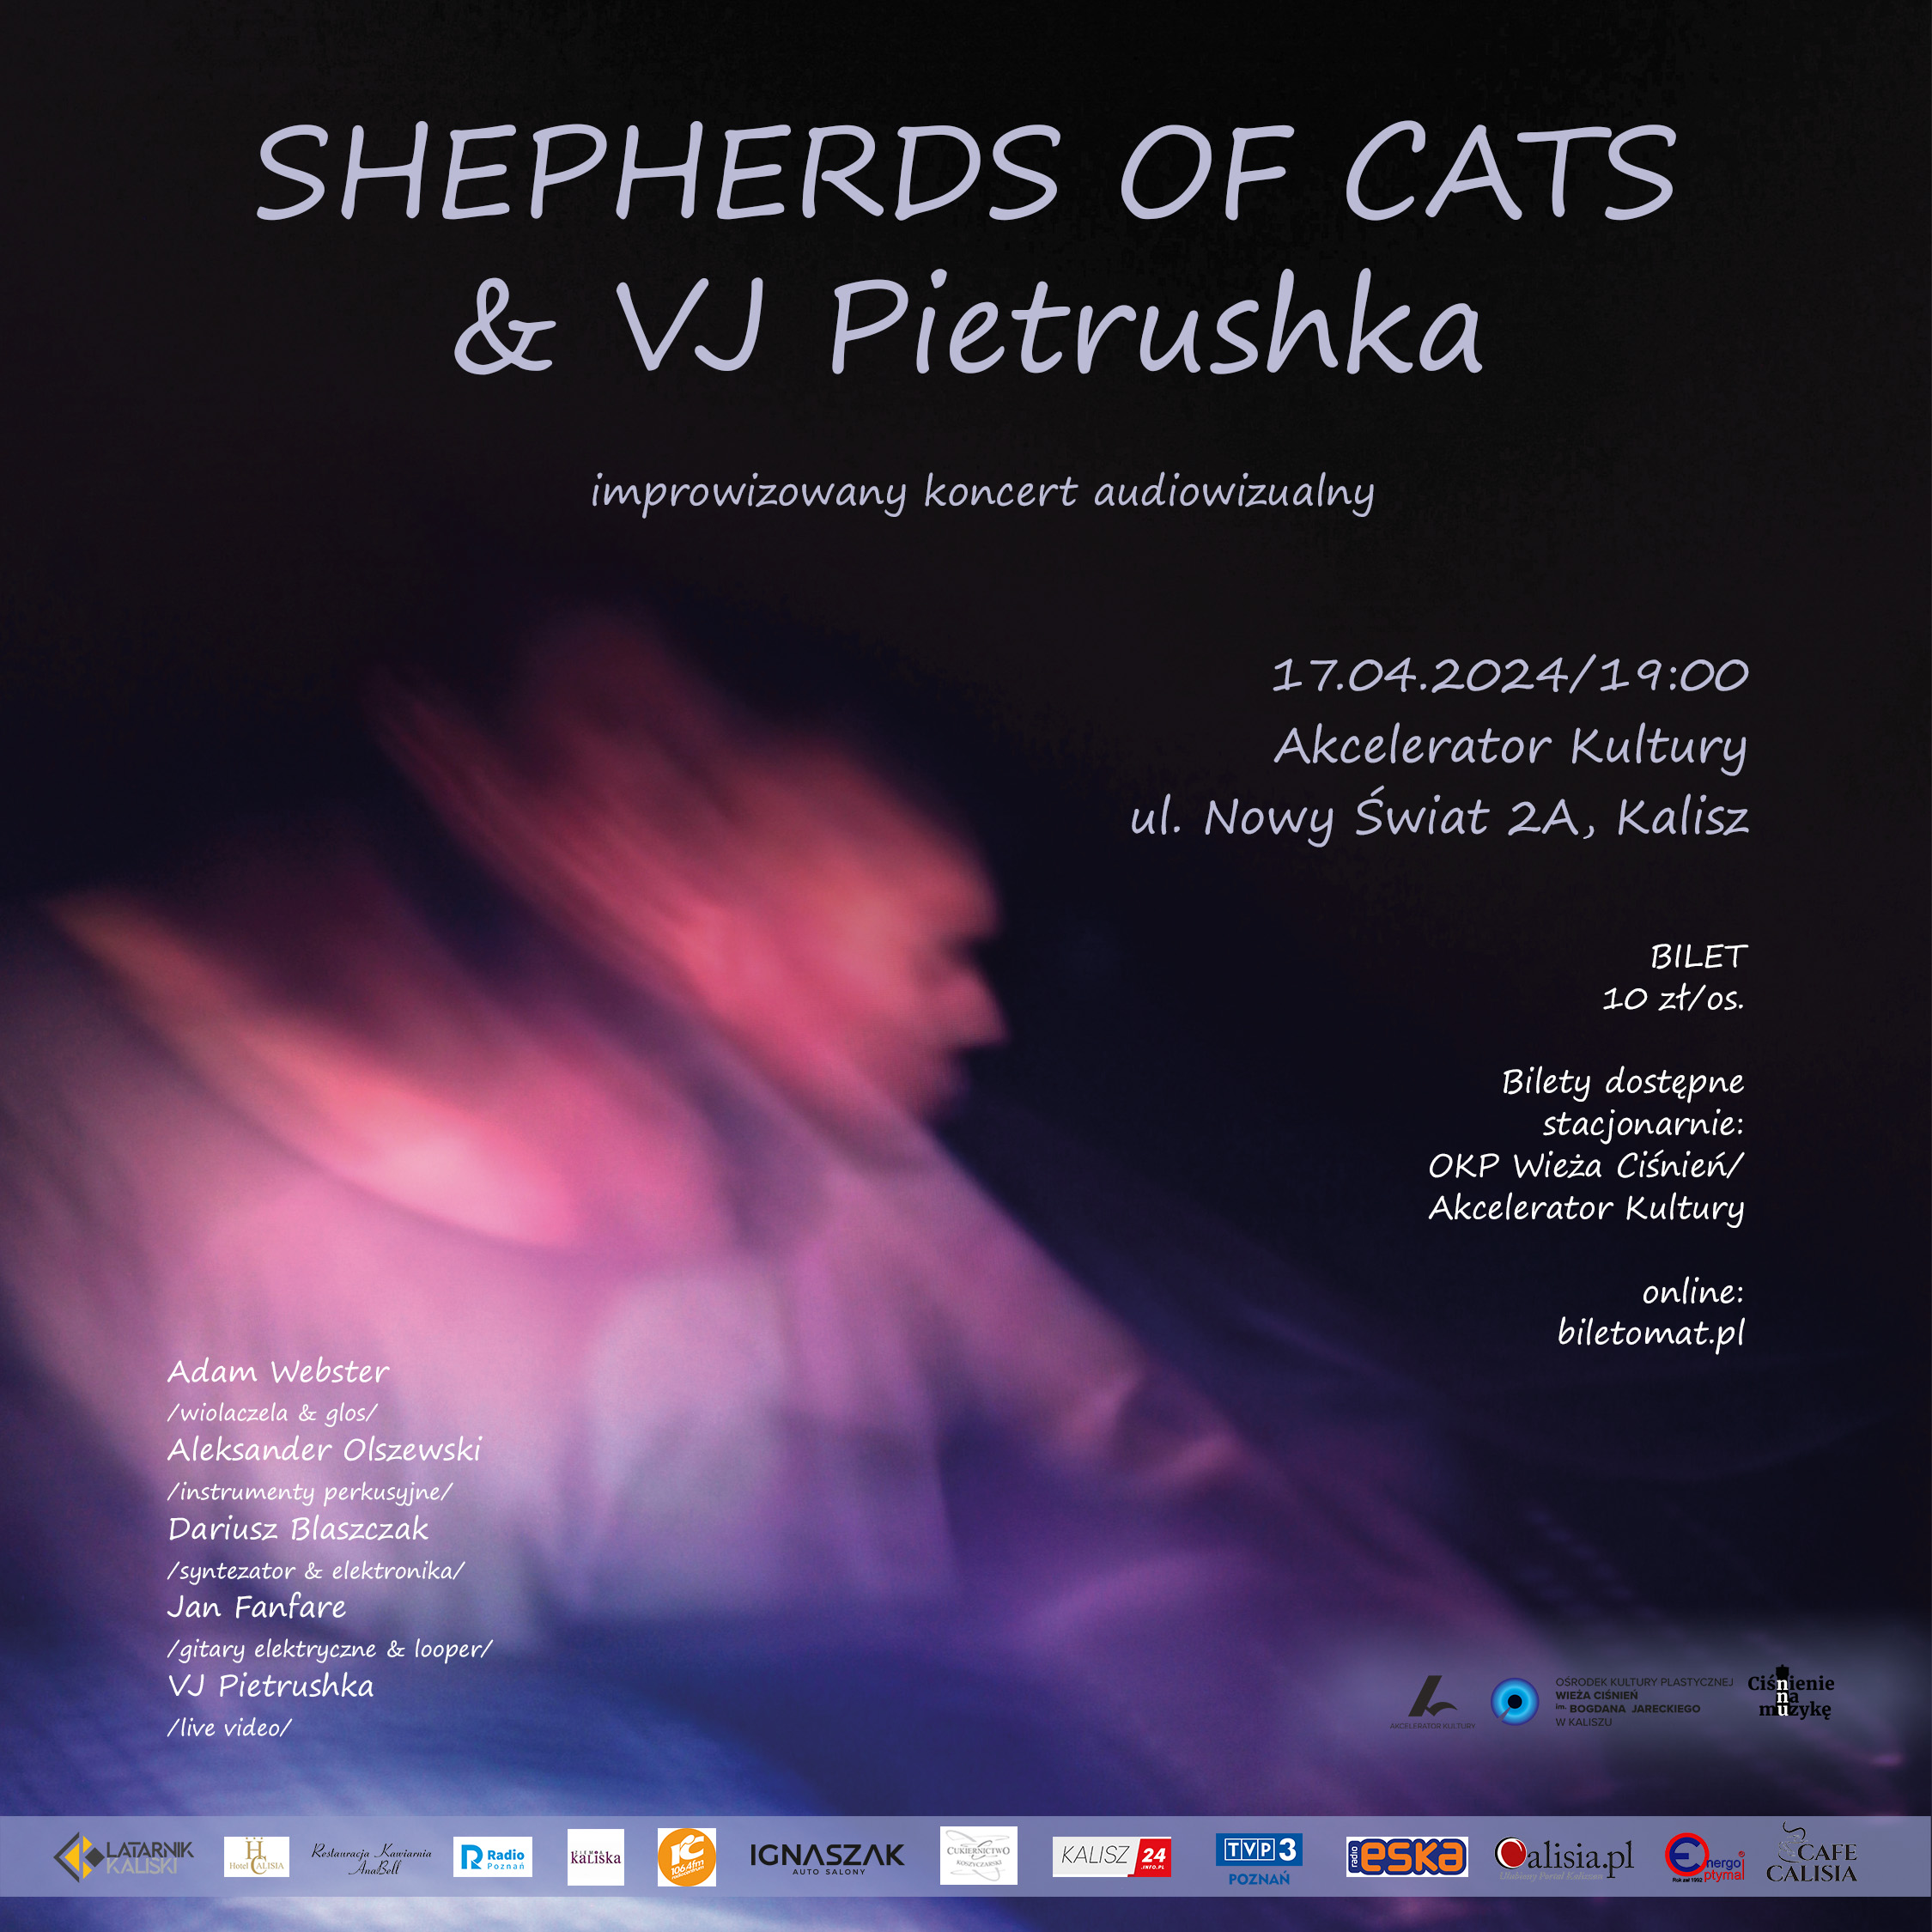 SHEPHERDS OF CATS & VJ PIETRUSHKA